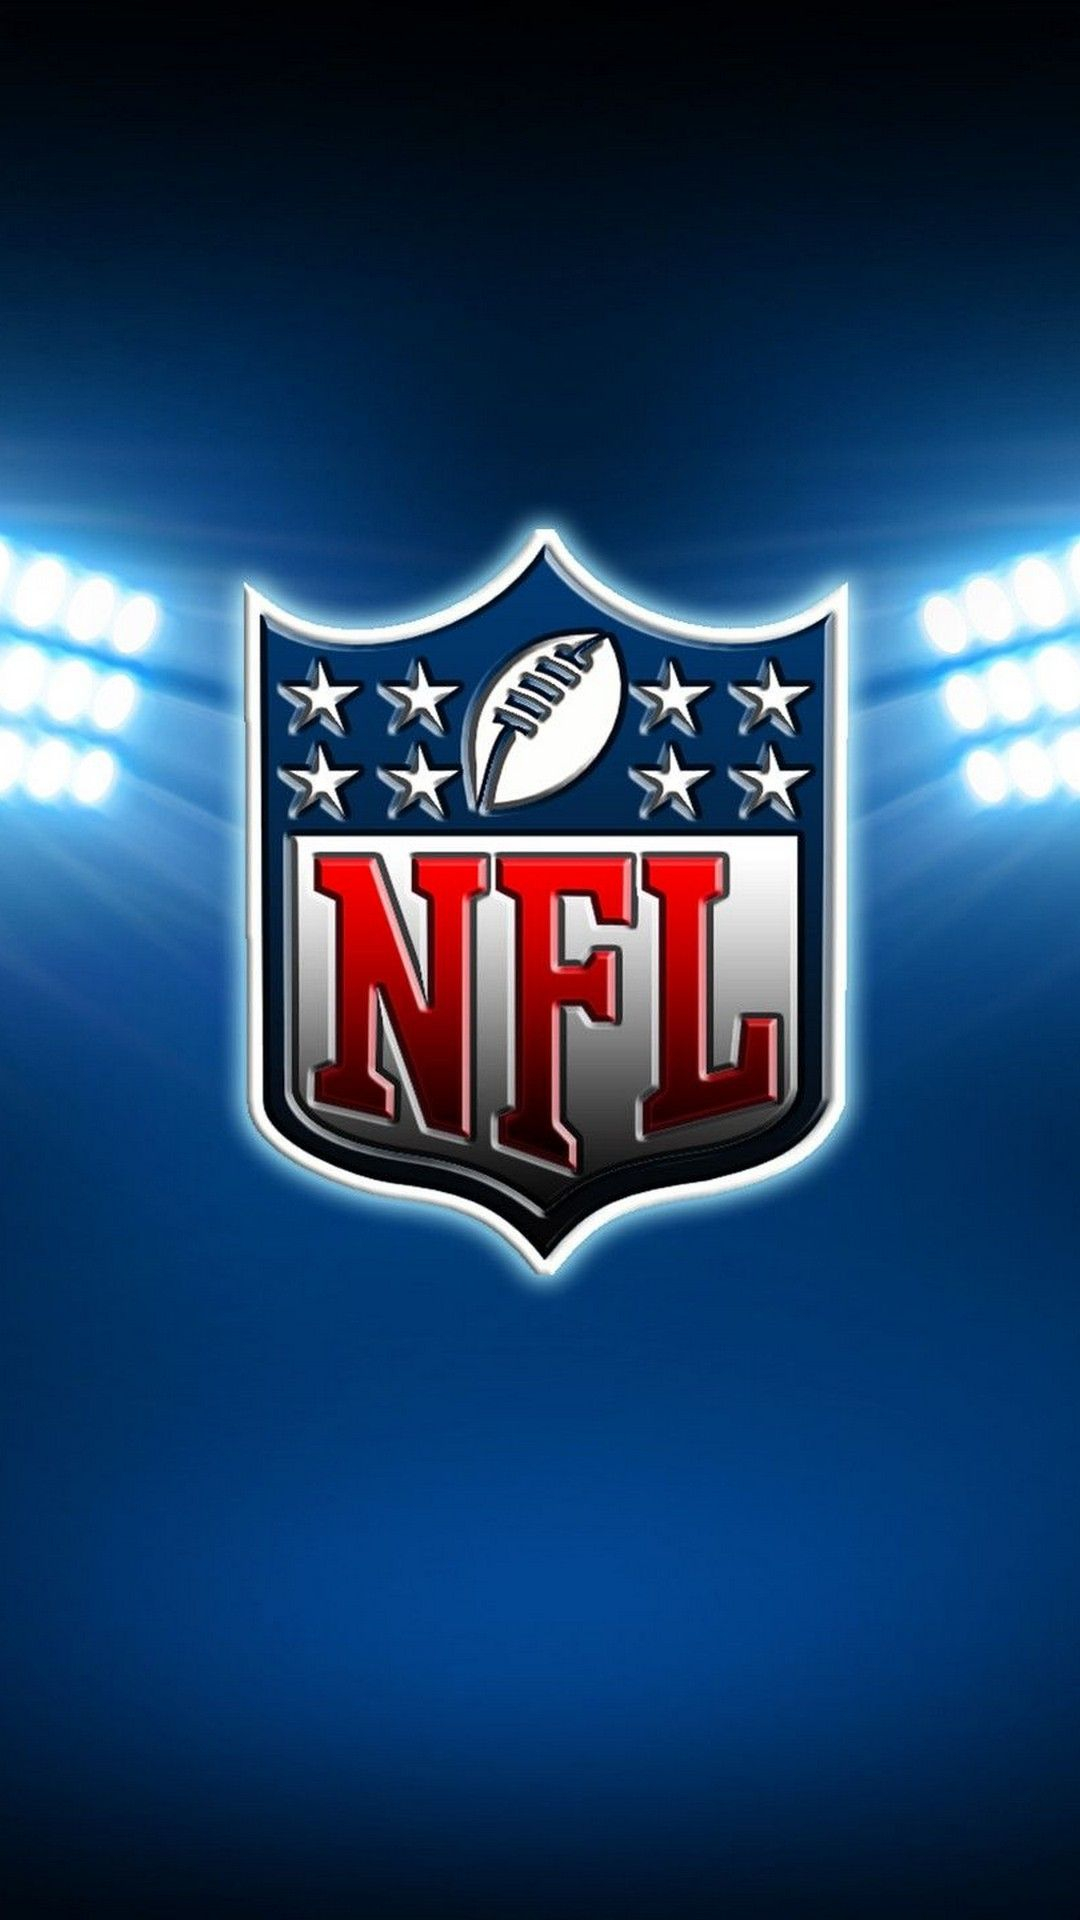 1080x1920 NFL iPhone 6 Wallpaper 2022 NFL Football Wallpapers | Nfl football wallpaper, Nfl logo, Nfl